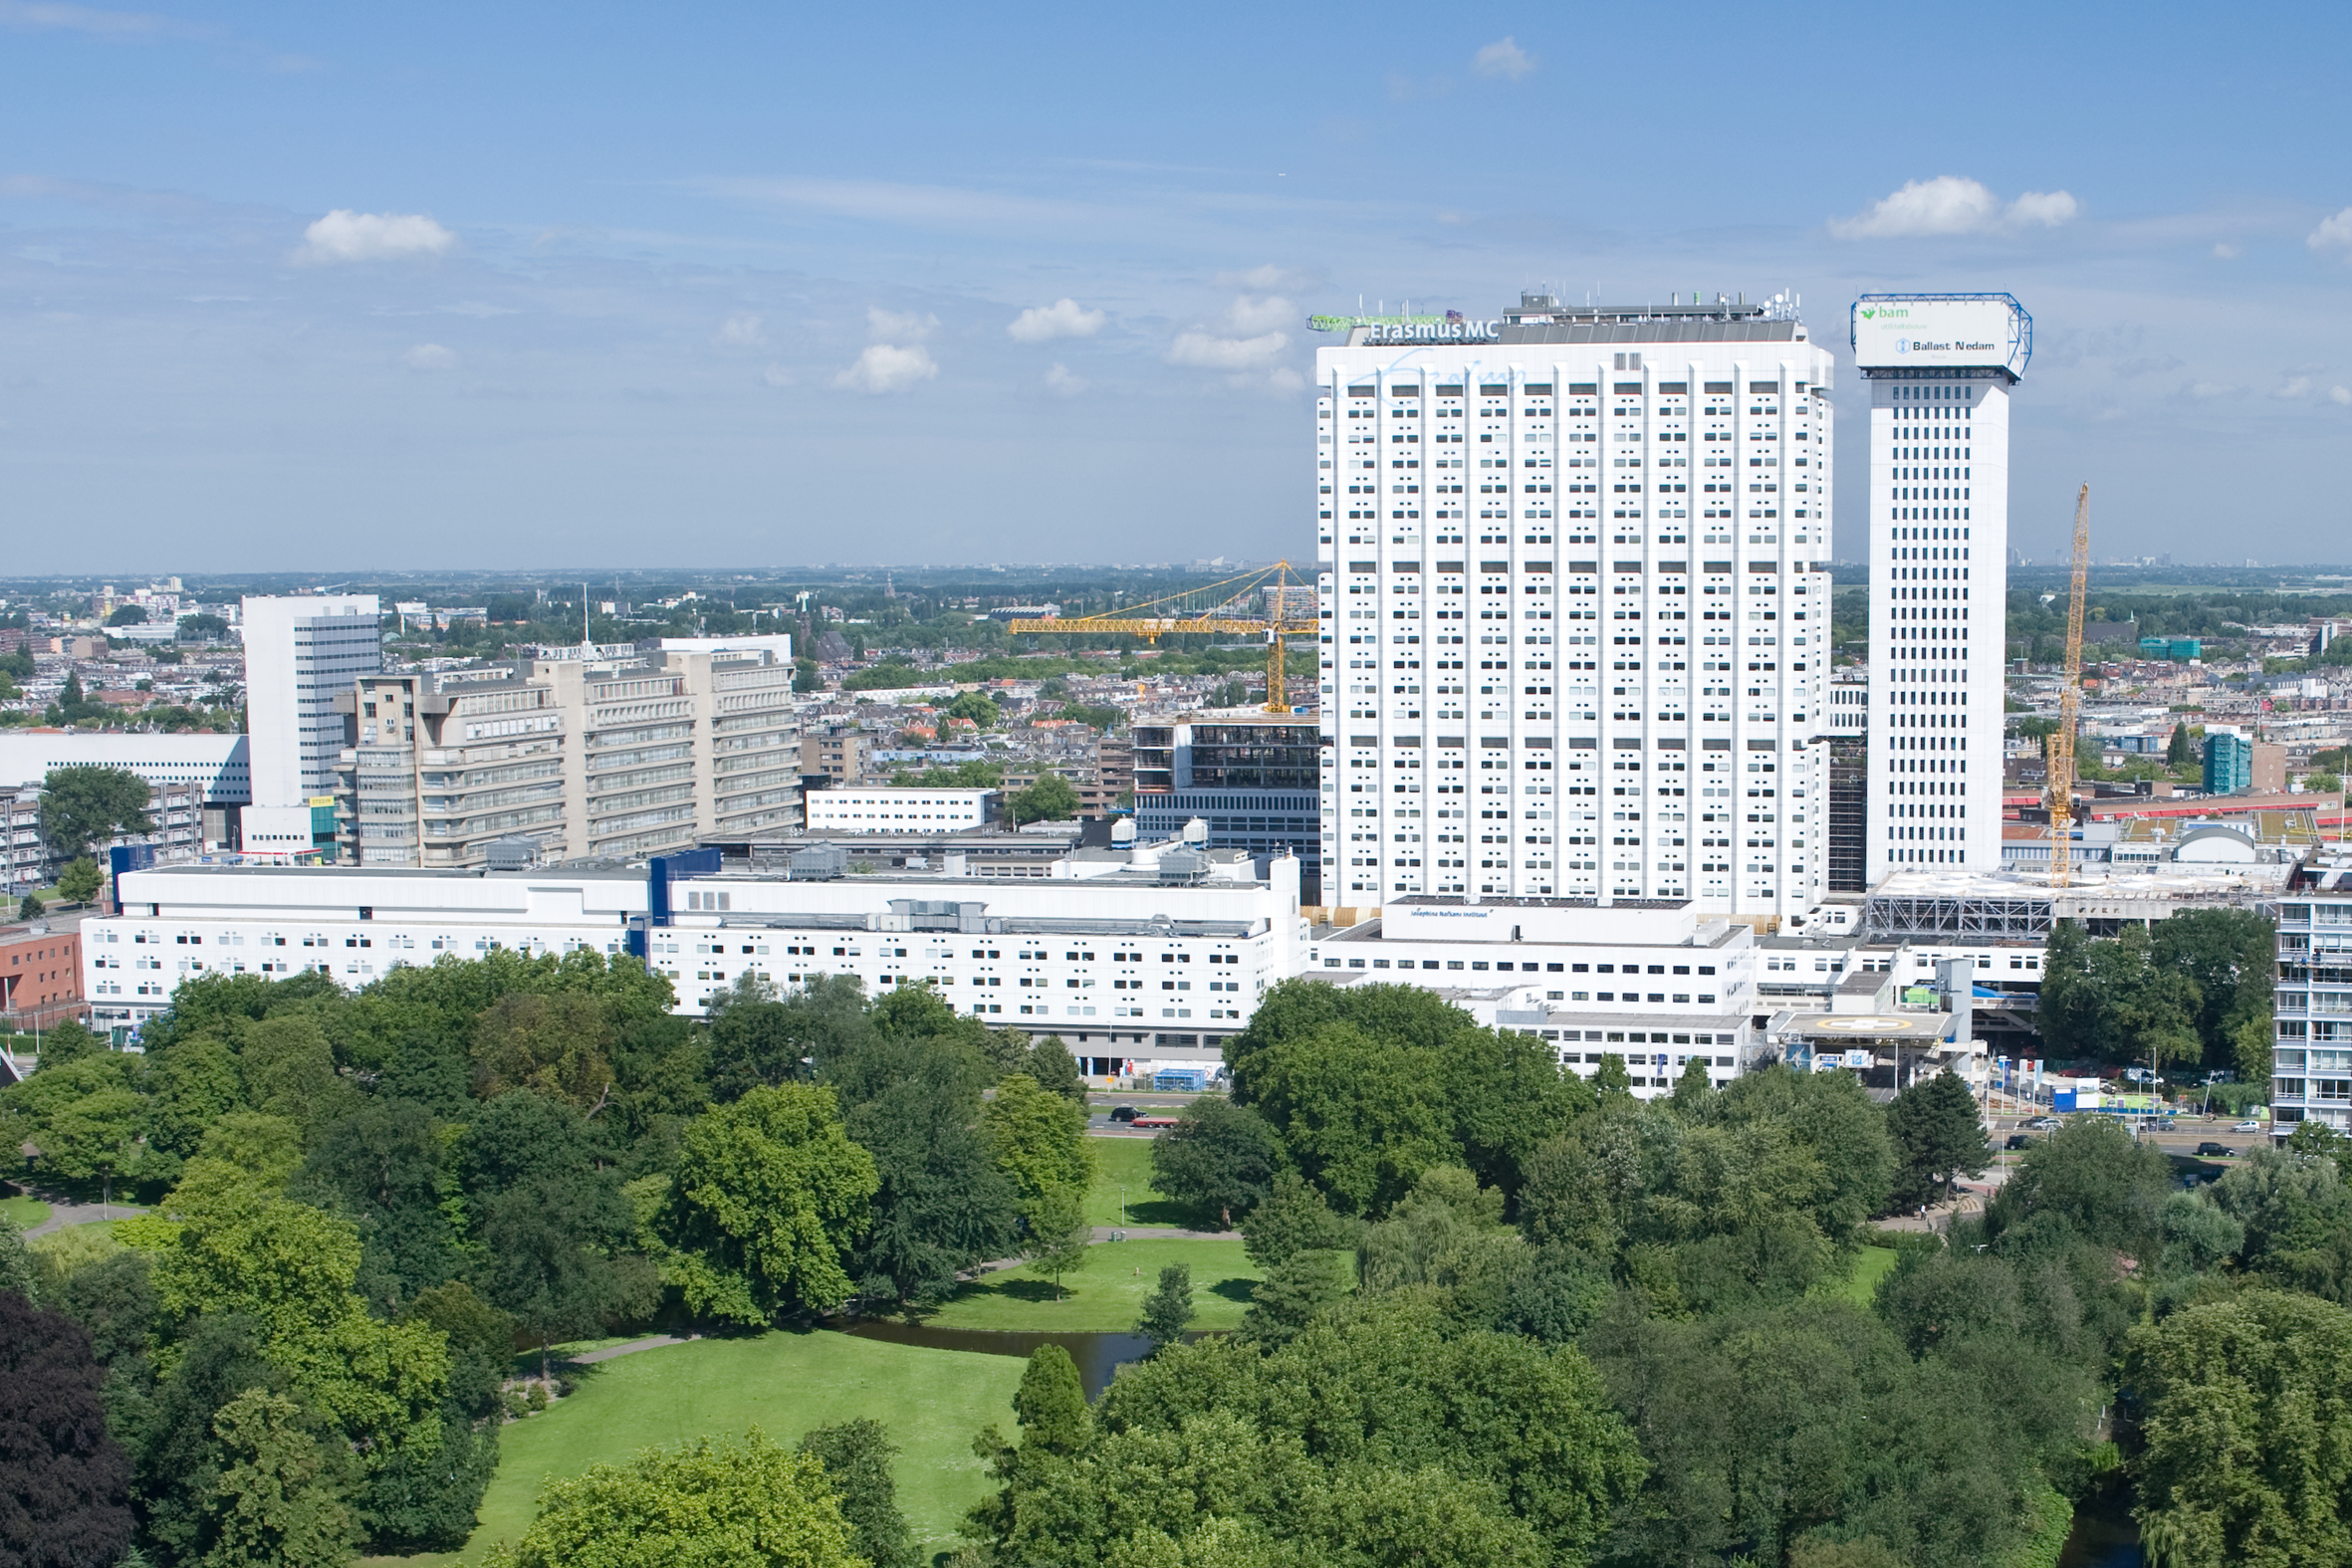 Universitz Medical Center Erasmus, Rotterdam